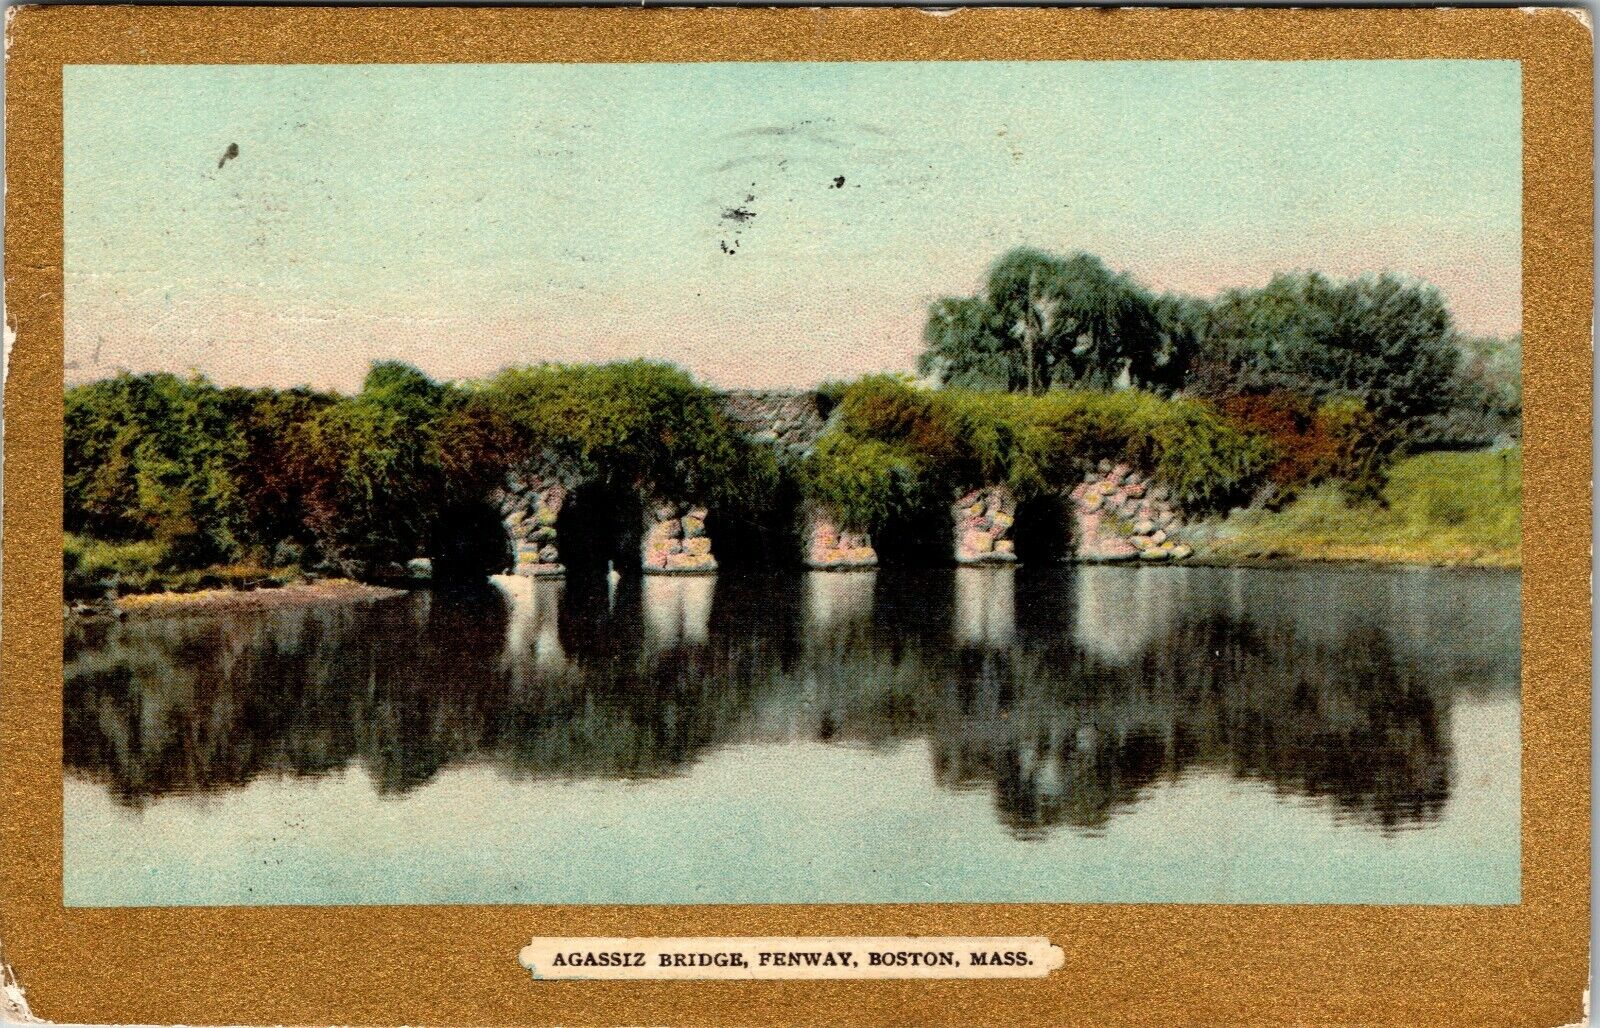 1910 Agassiz Bridge Fenway Boston Massachusetts Antique Divided Back Postcard 